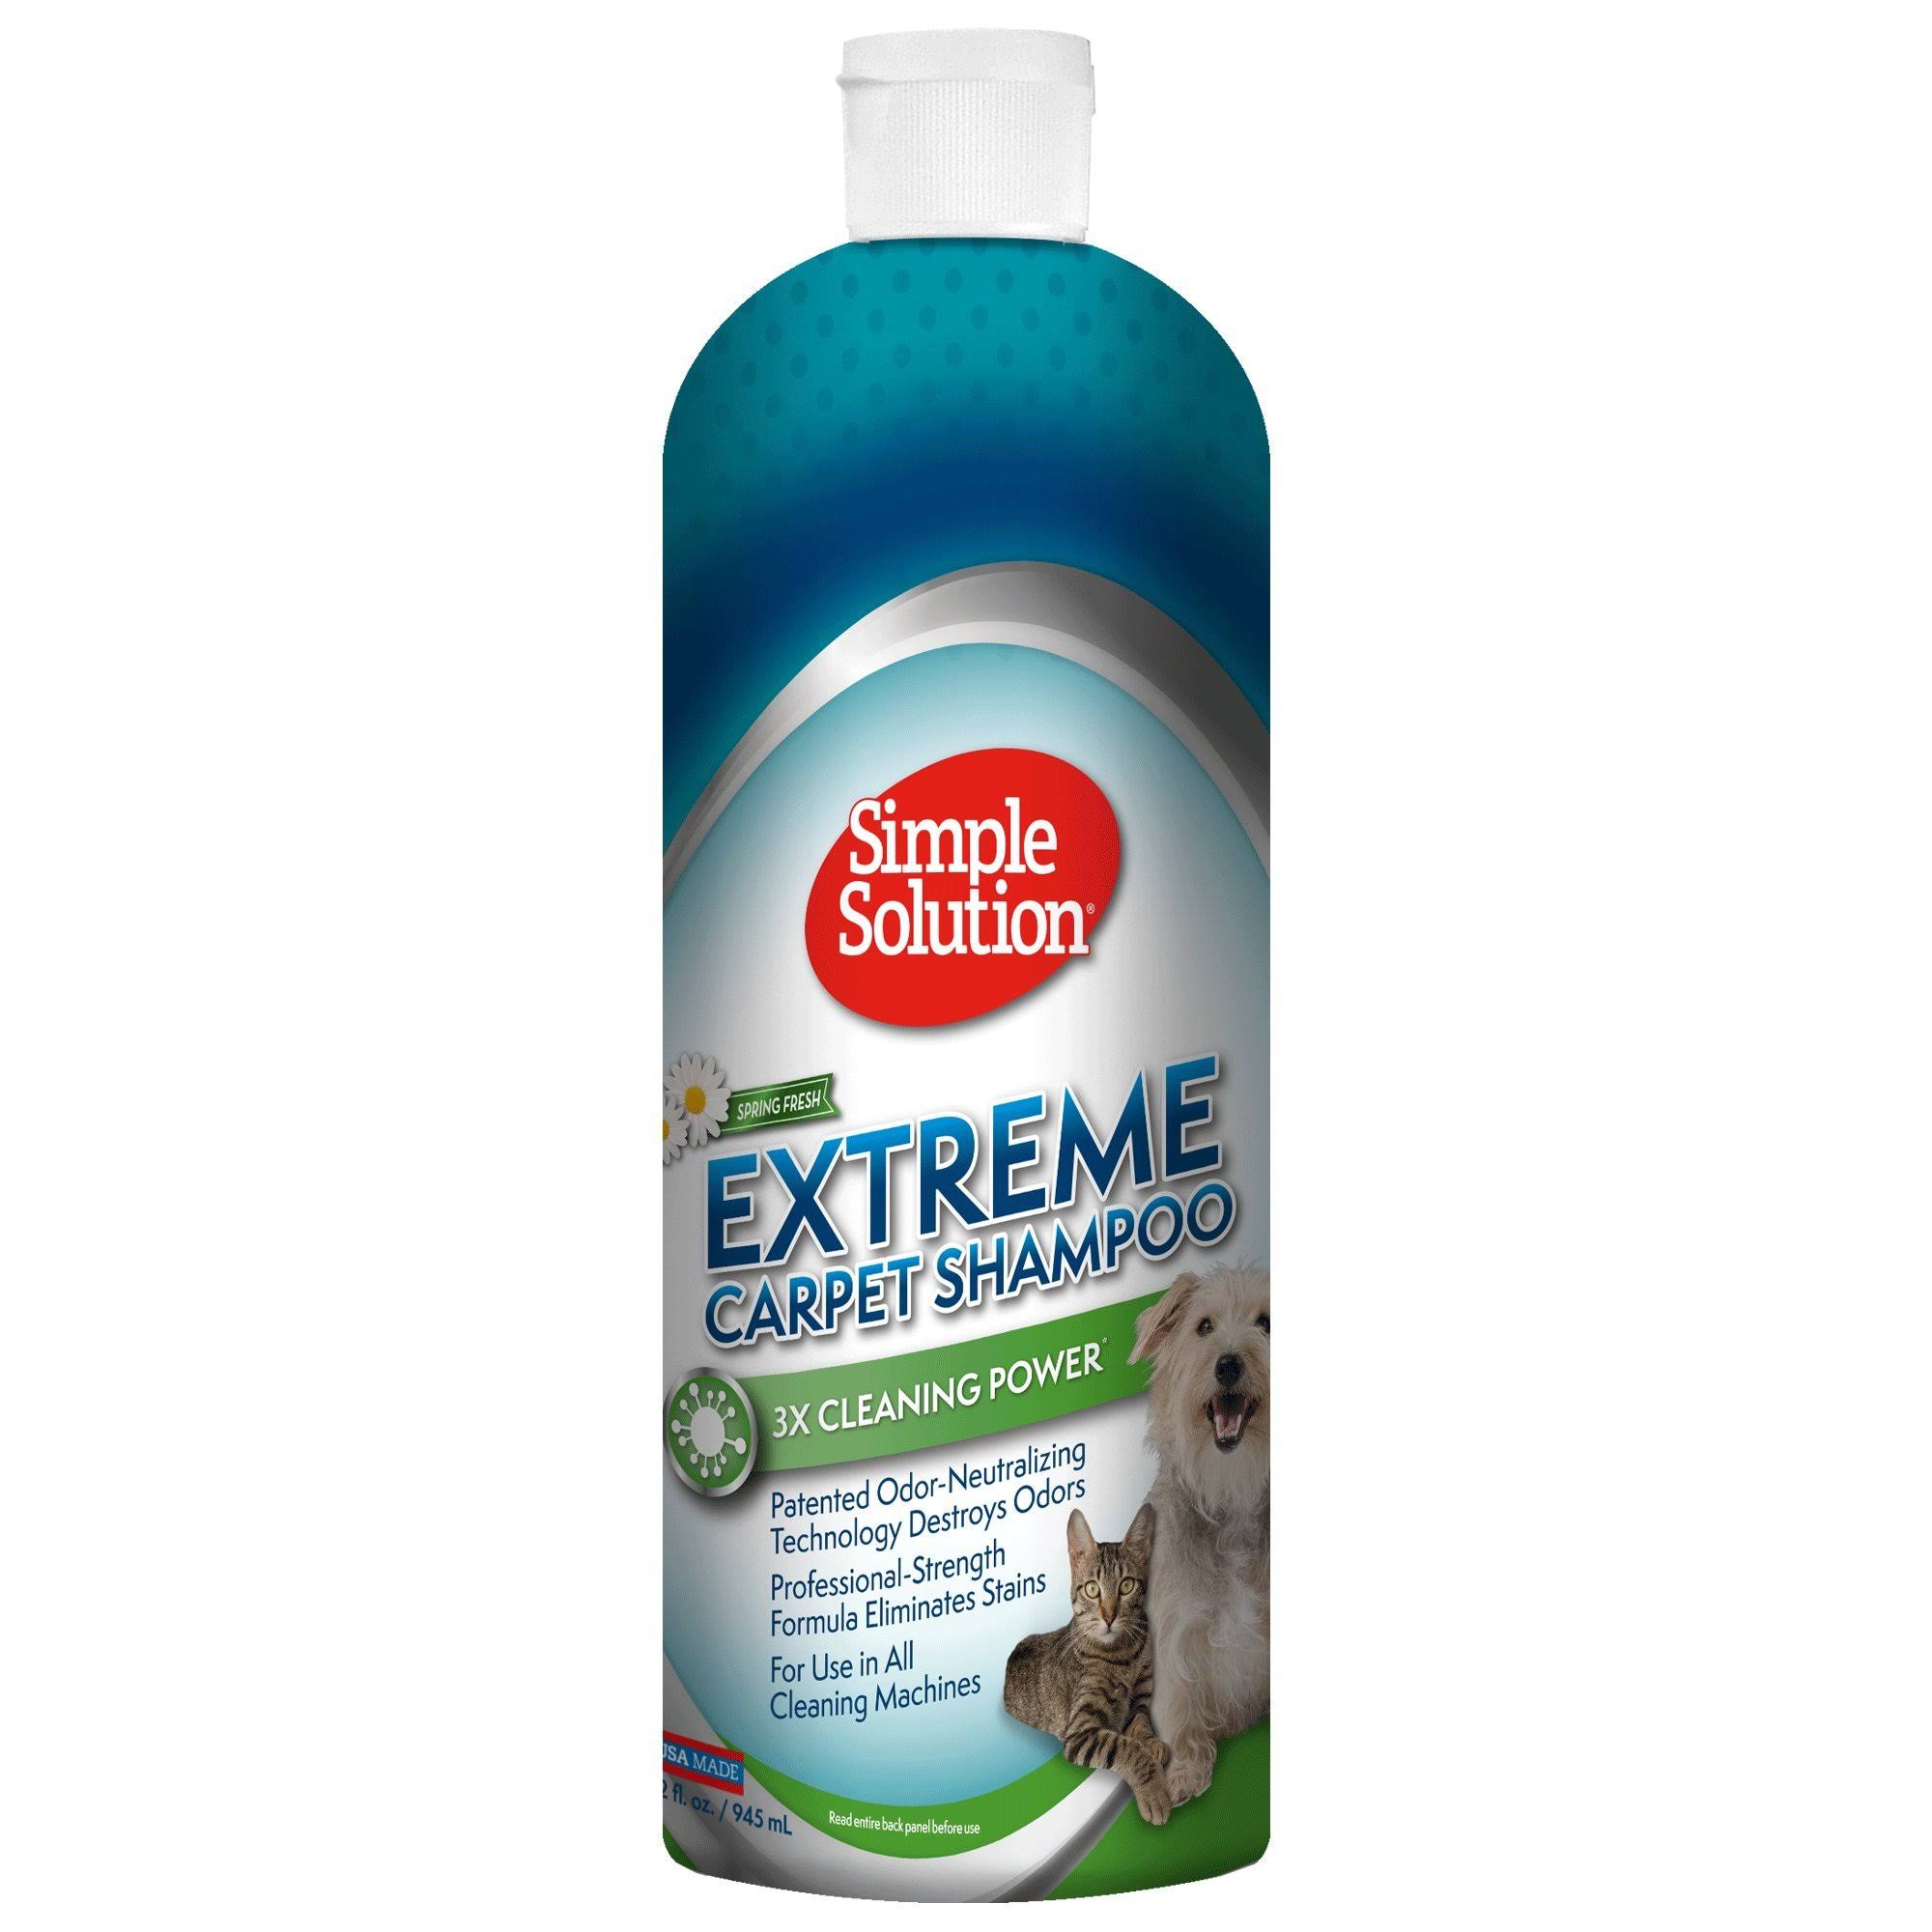 Simple Solution Extreme Carpet Shampoo - 32oz